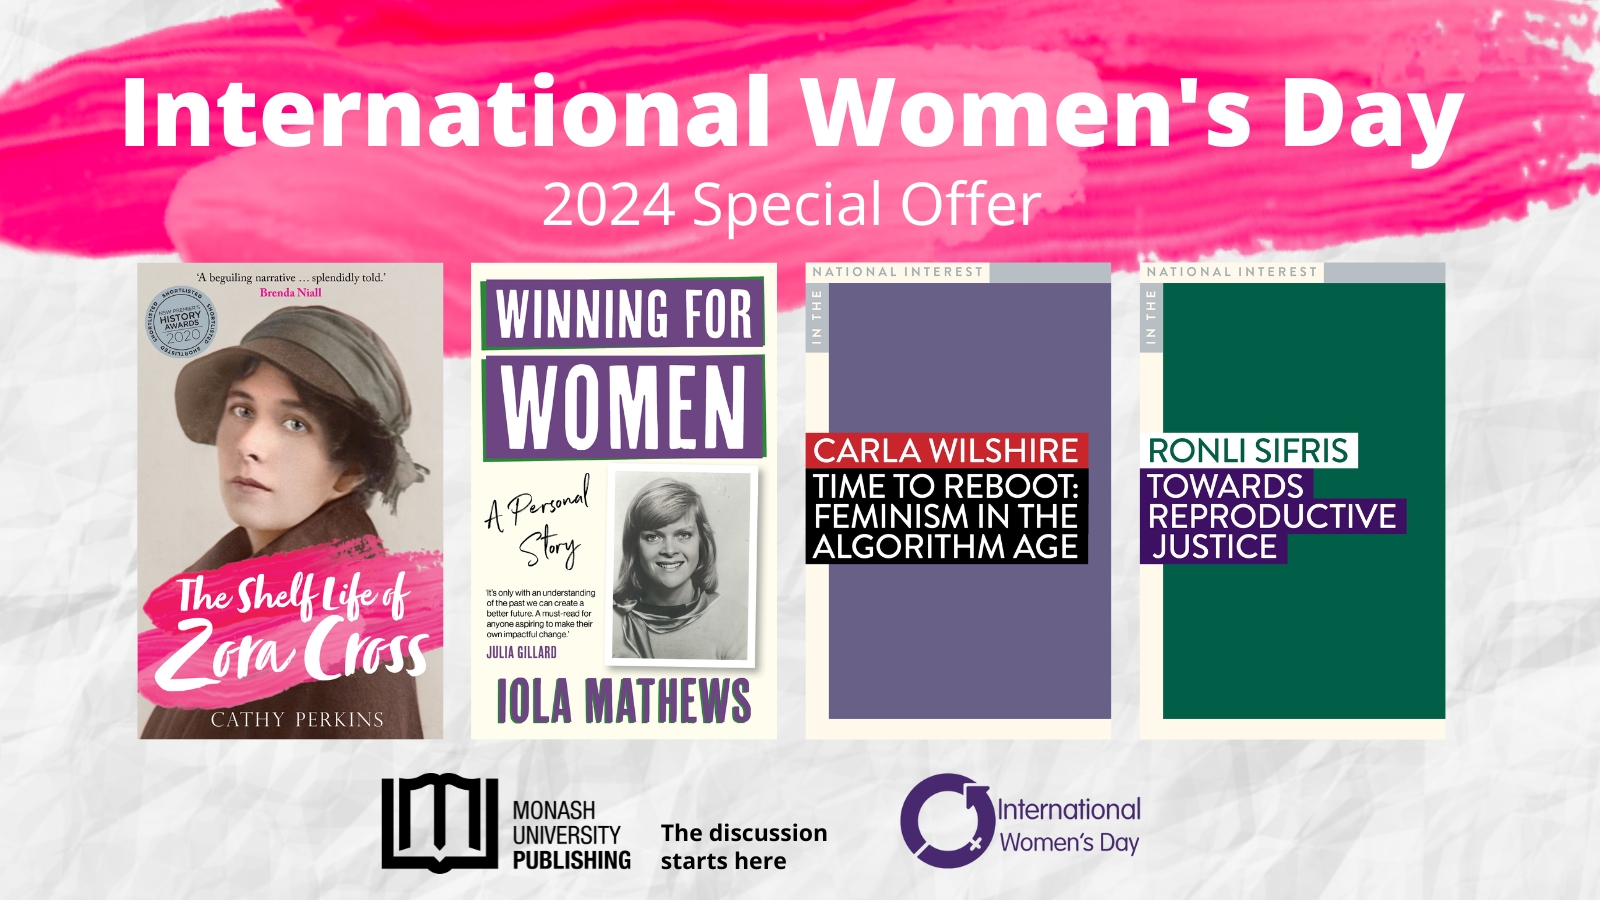 International Women's Day 2024 Special Offer – Monash University